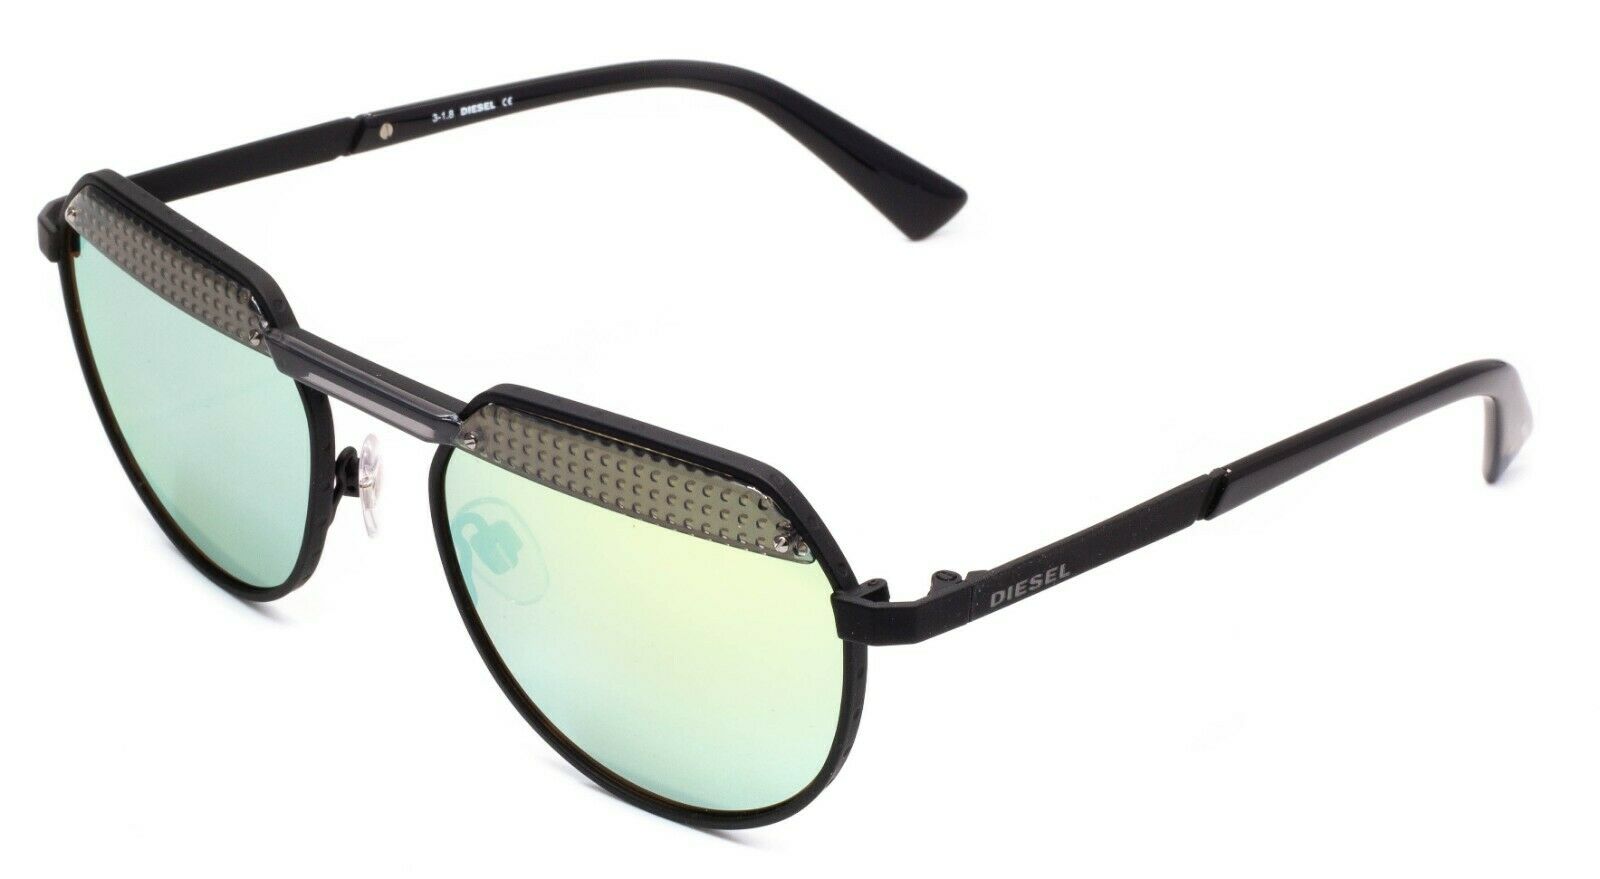 DIESEL DL 0260 02Q *3 52mm Sunglasses Shades Eyewear FRAMES Glasses BNIB - New